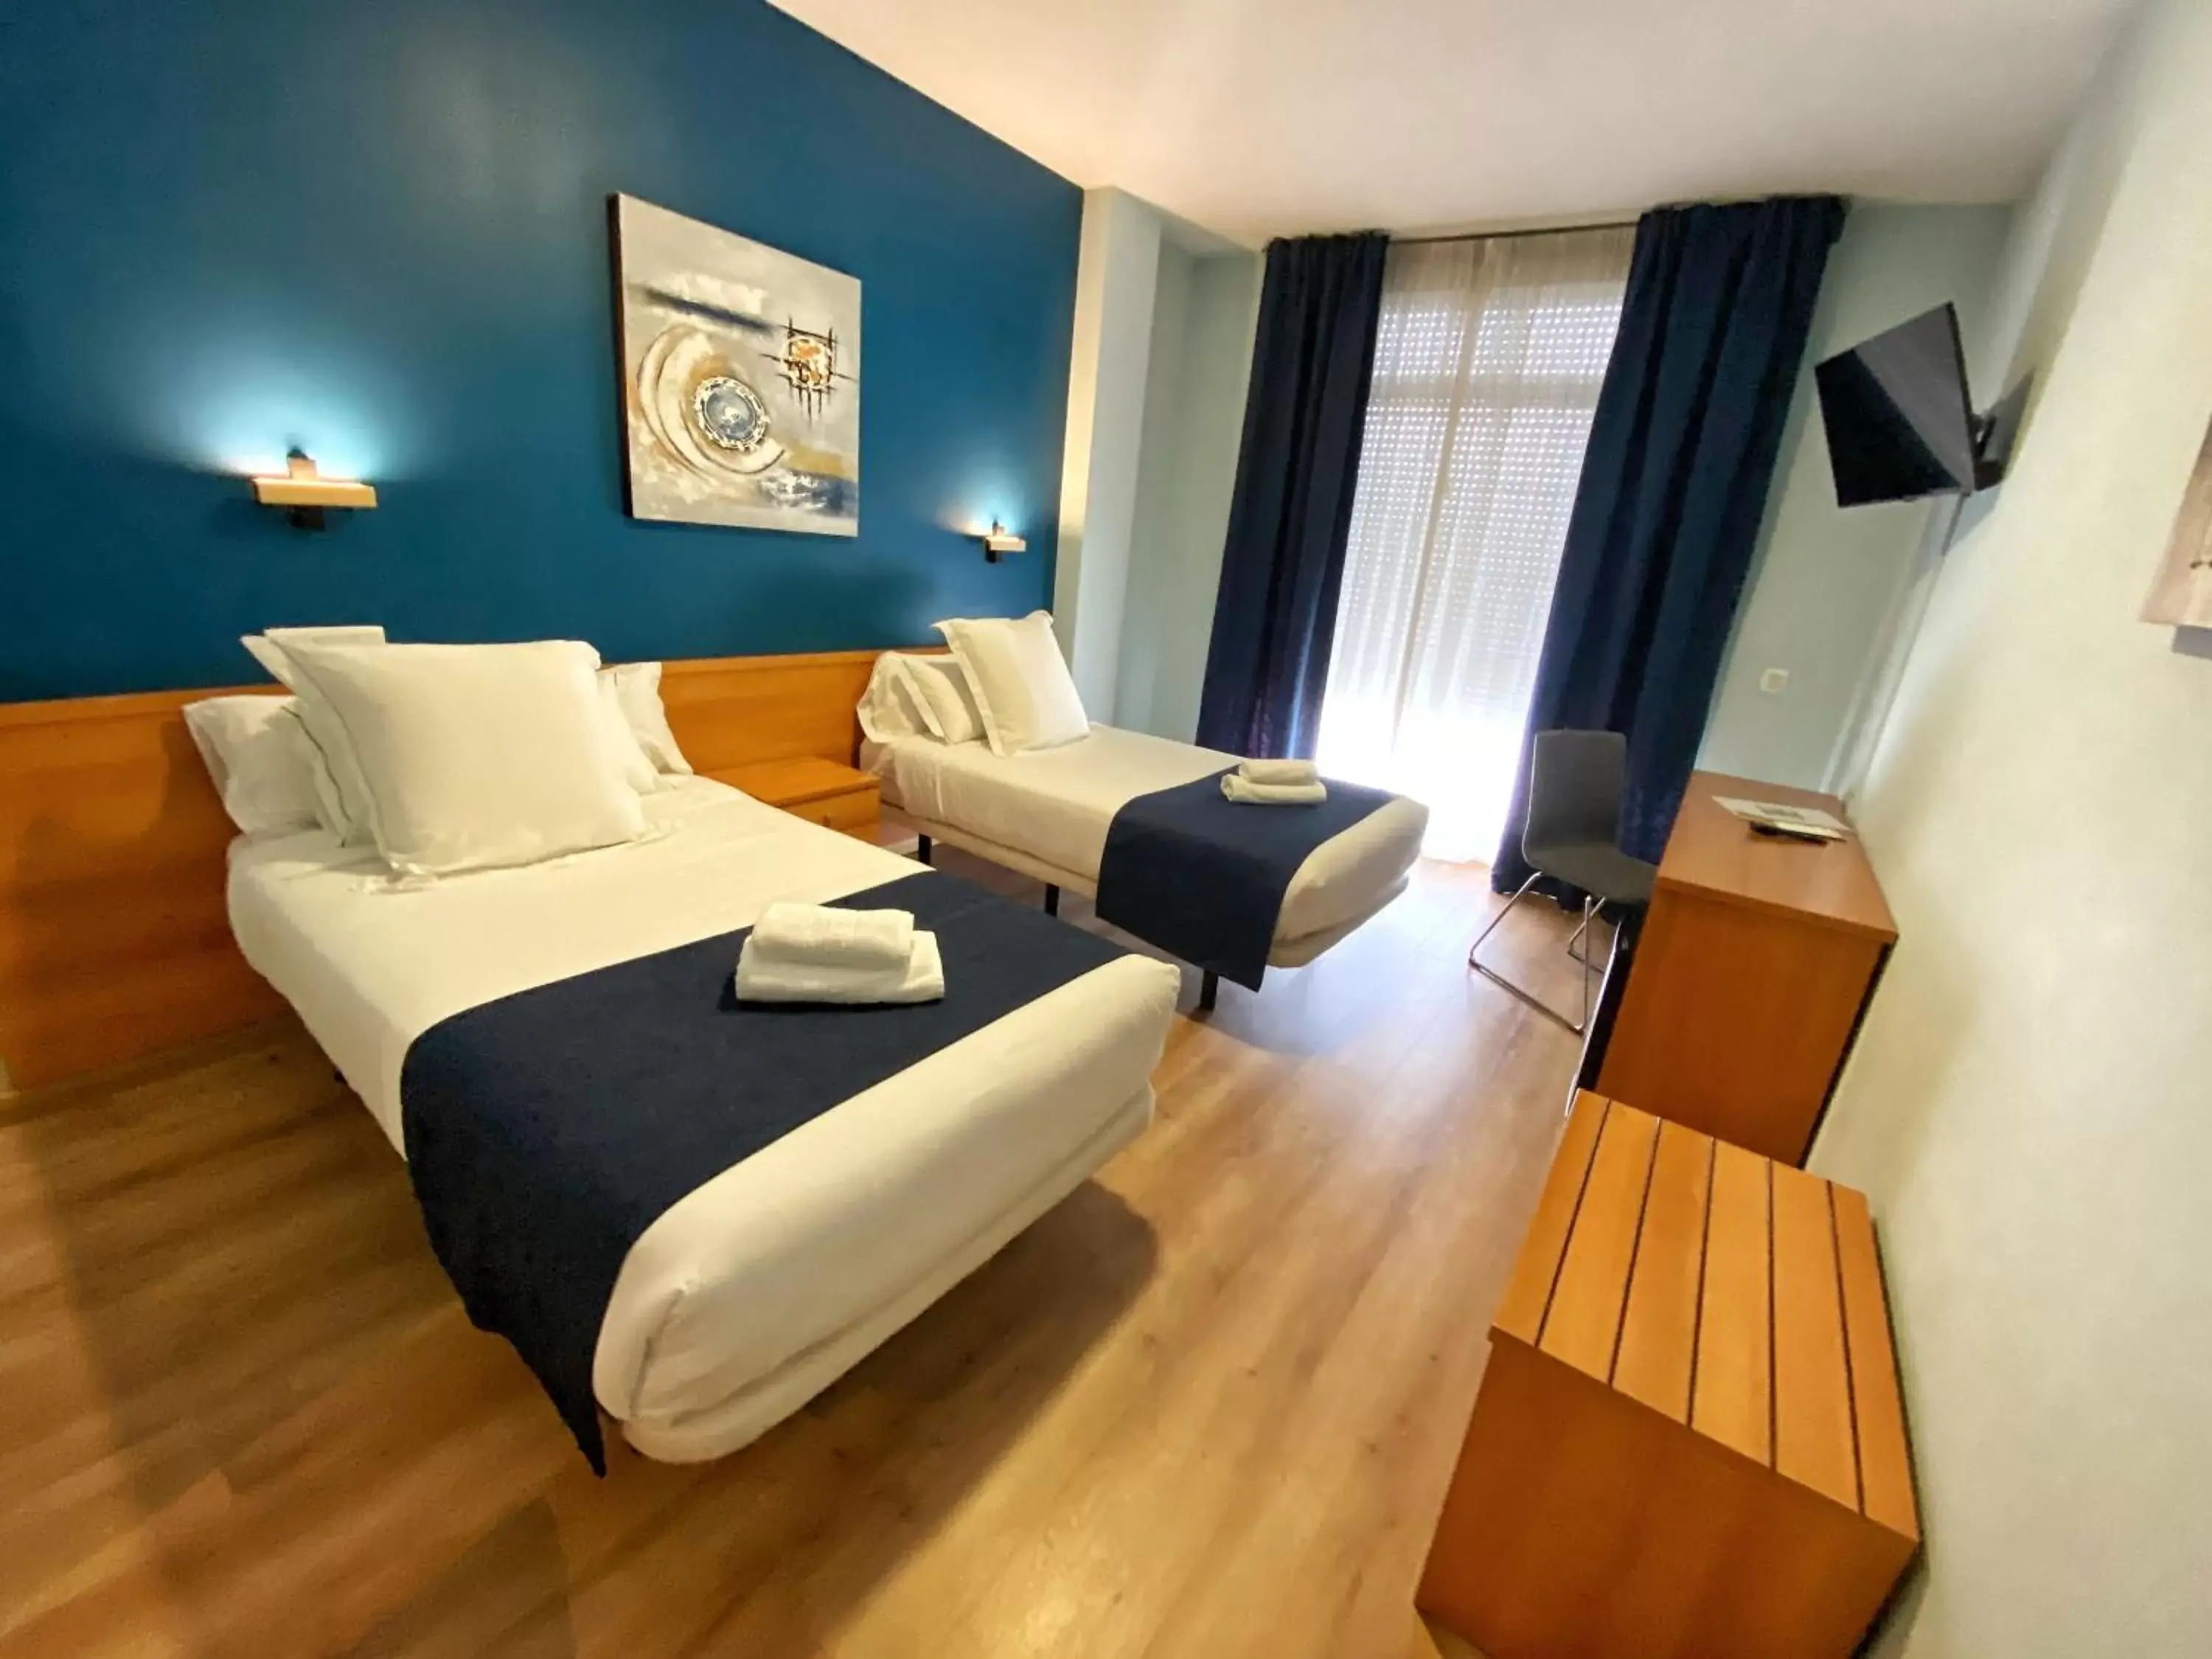 Bed in Hotel Ribeira Sacra